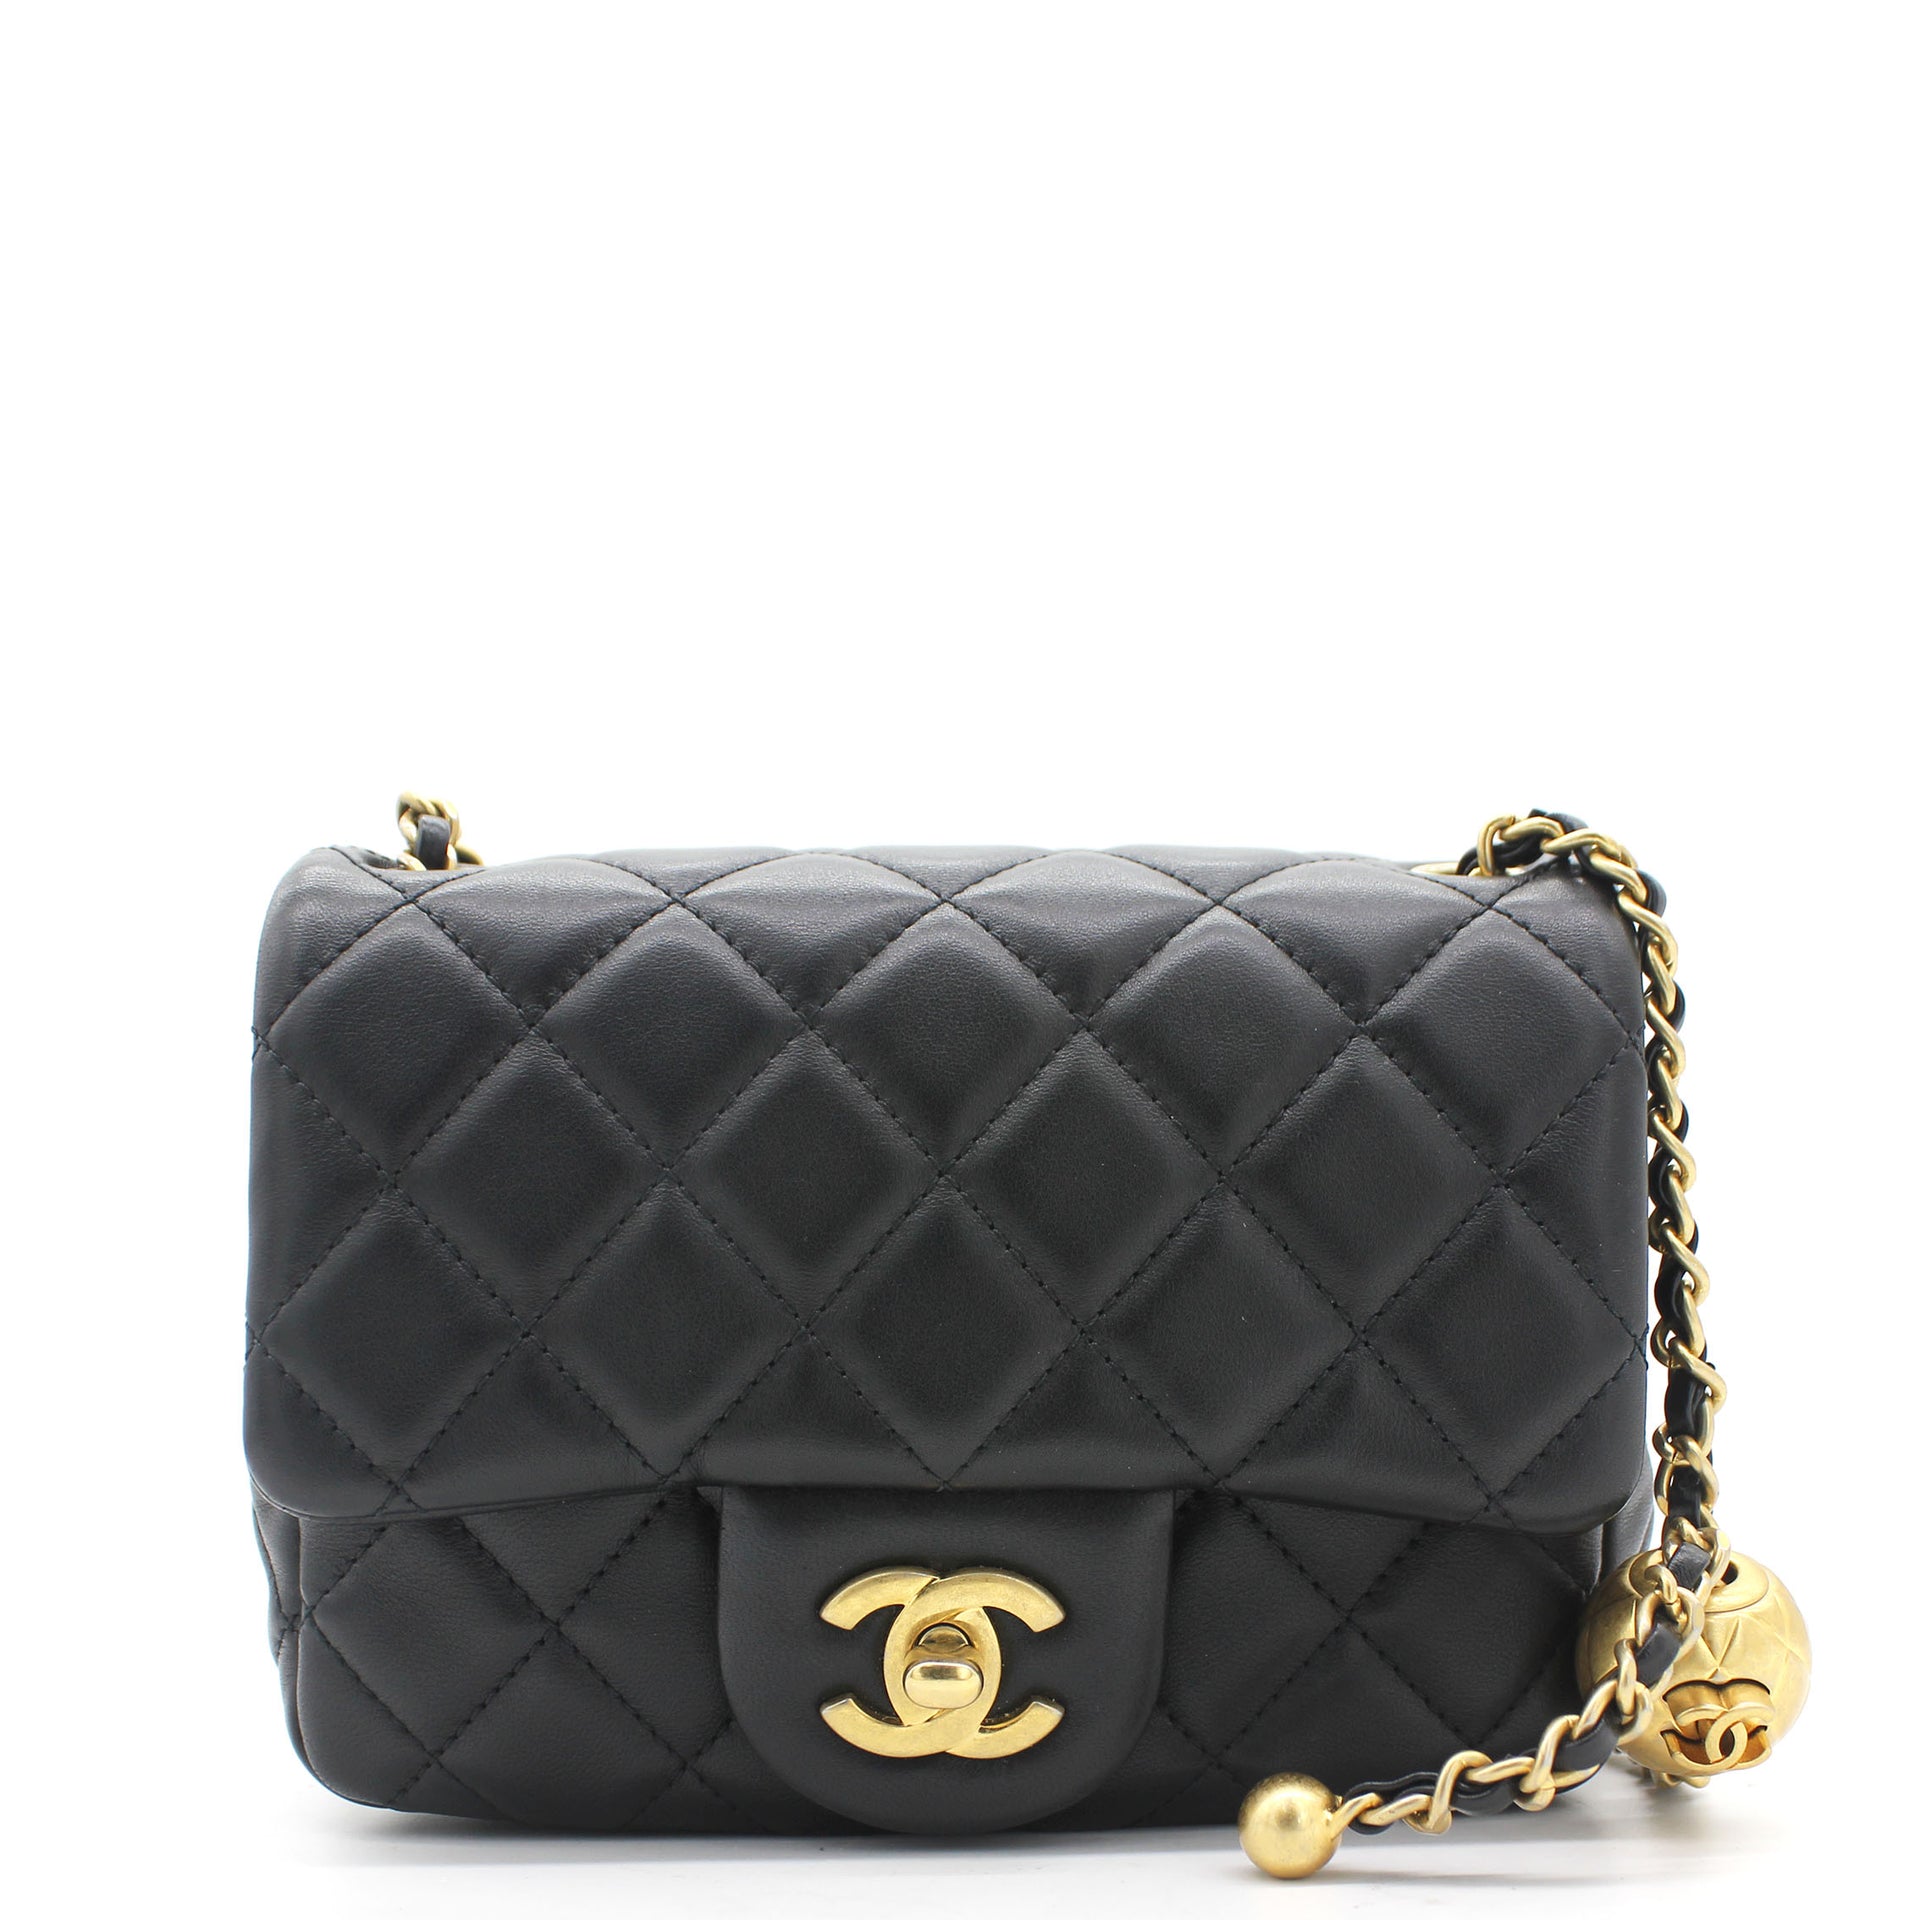 Chanel Chic Pearl Bag Goatskin Black GHW  Laulay Luxury